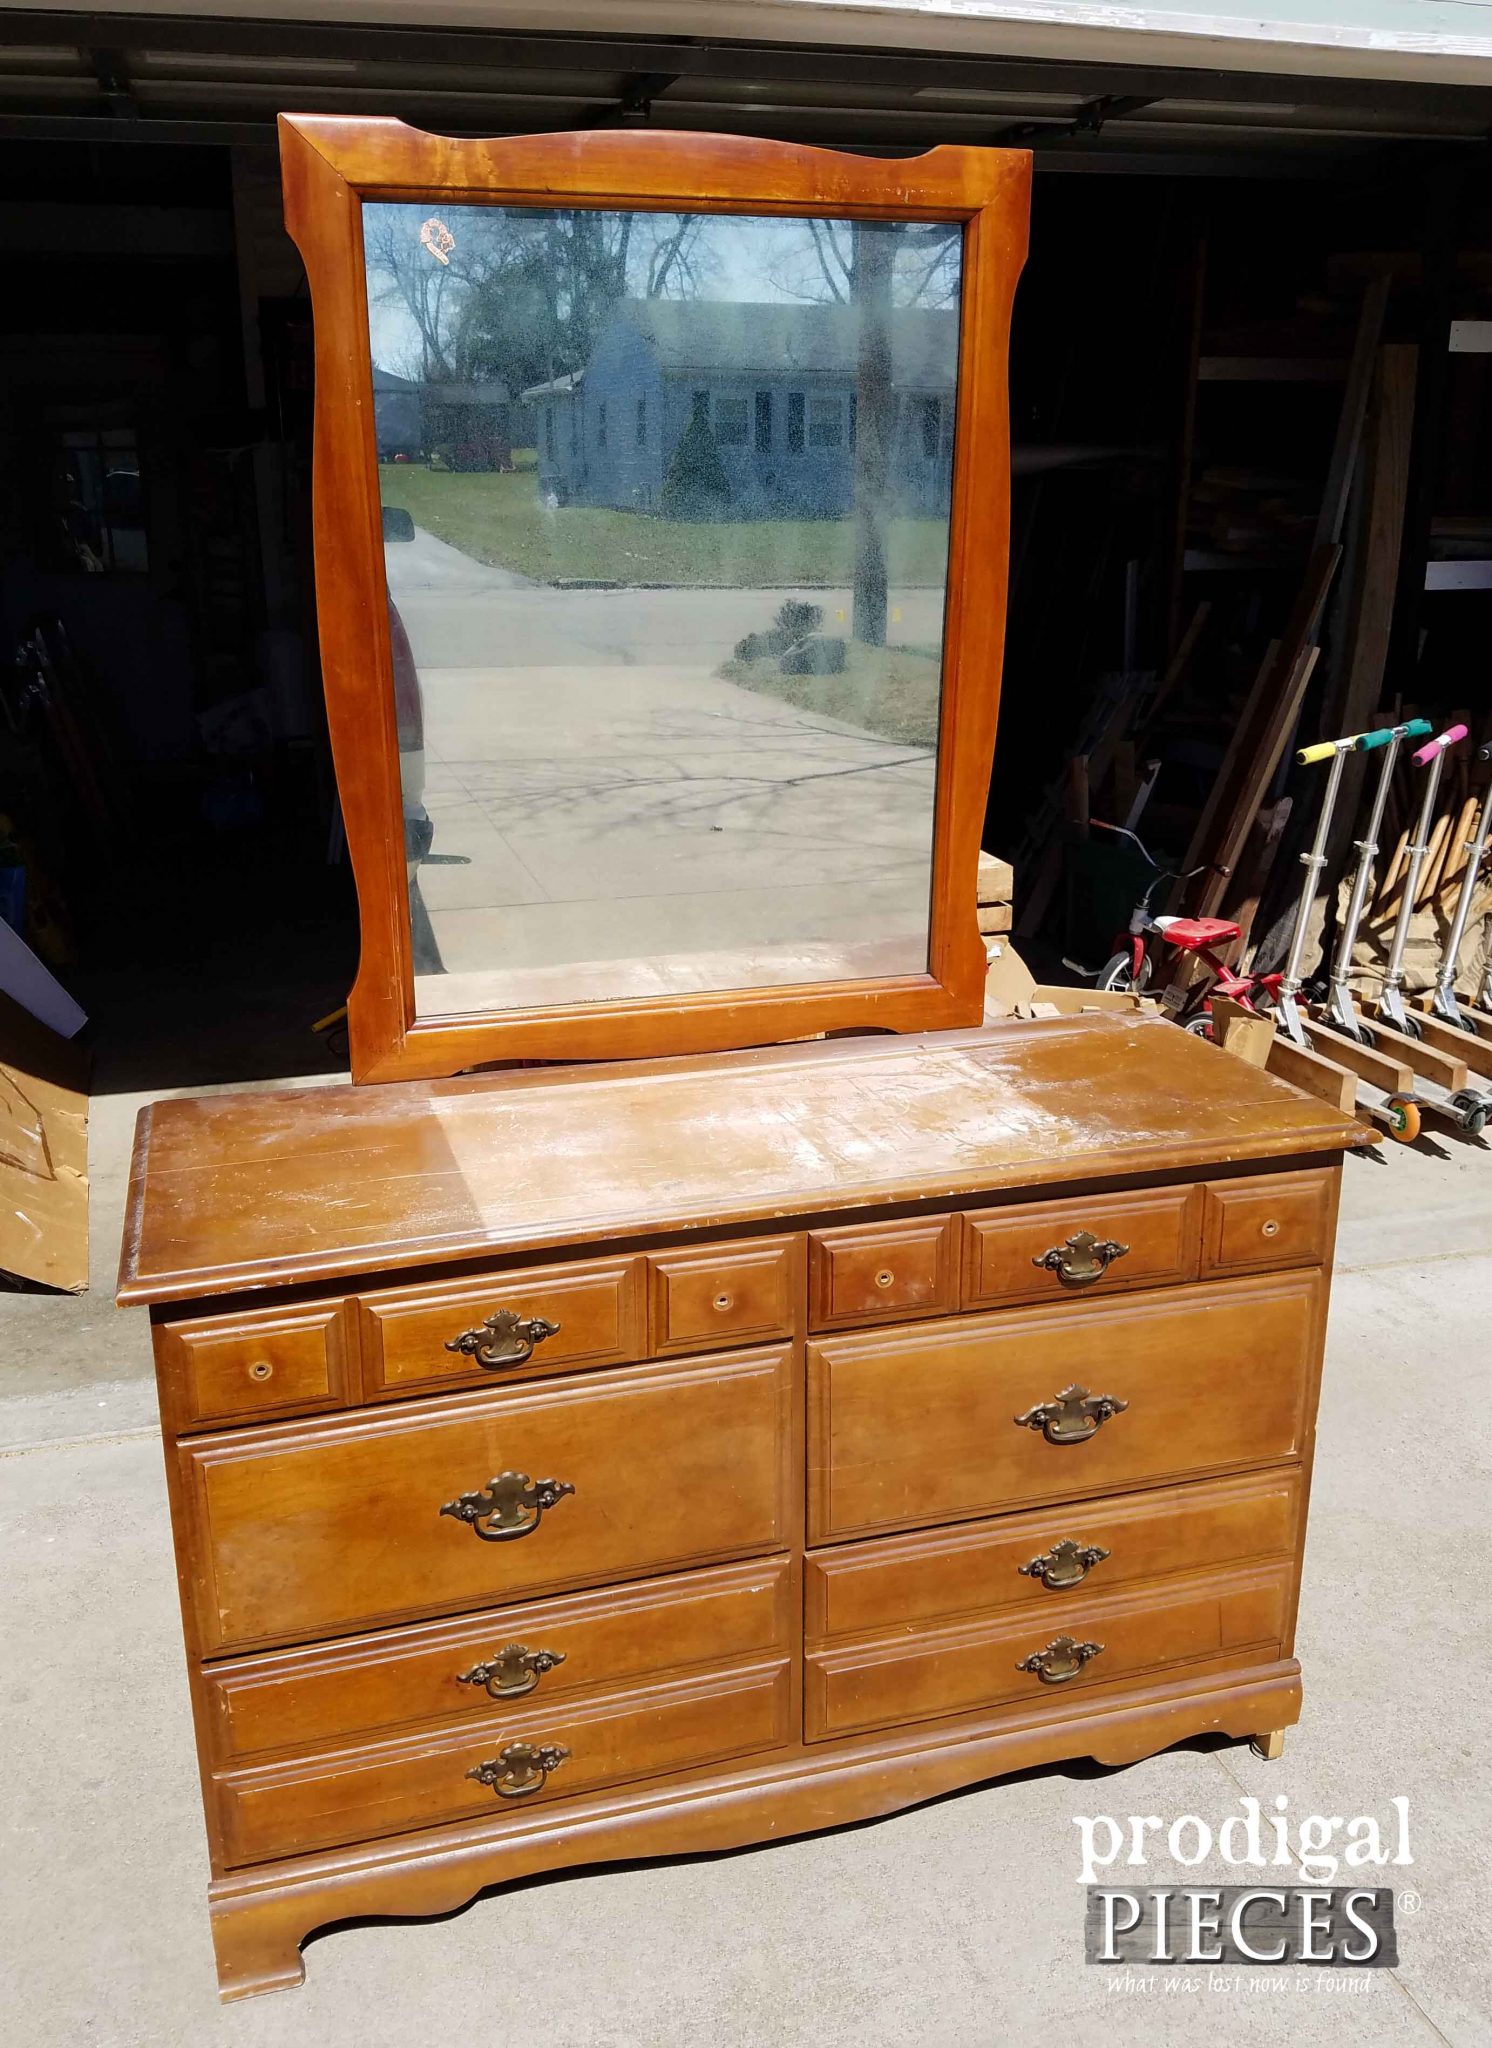 Vintage Dresser Before Updating | Prodigal Pieces | prodigalpieces.com